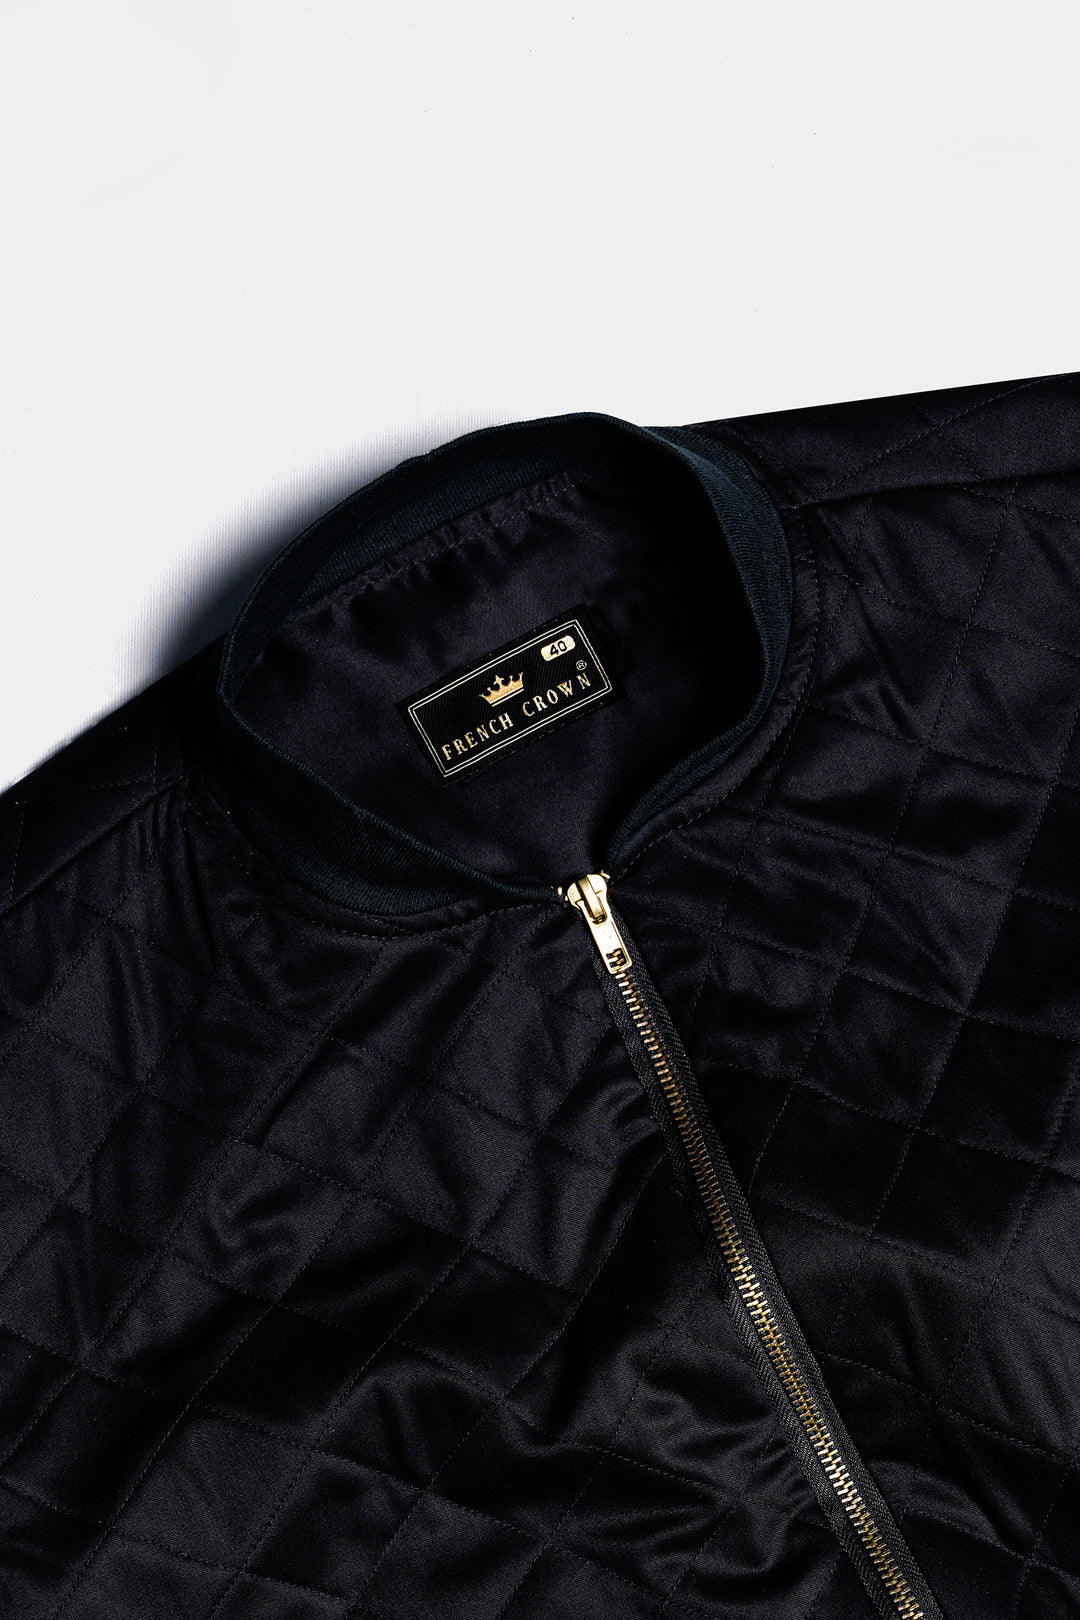 Jade Black Zipper Closure Super Soft Premium Cotton Bomber Jacket